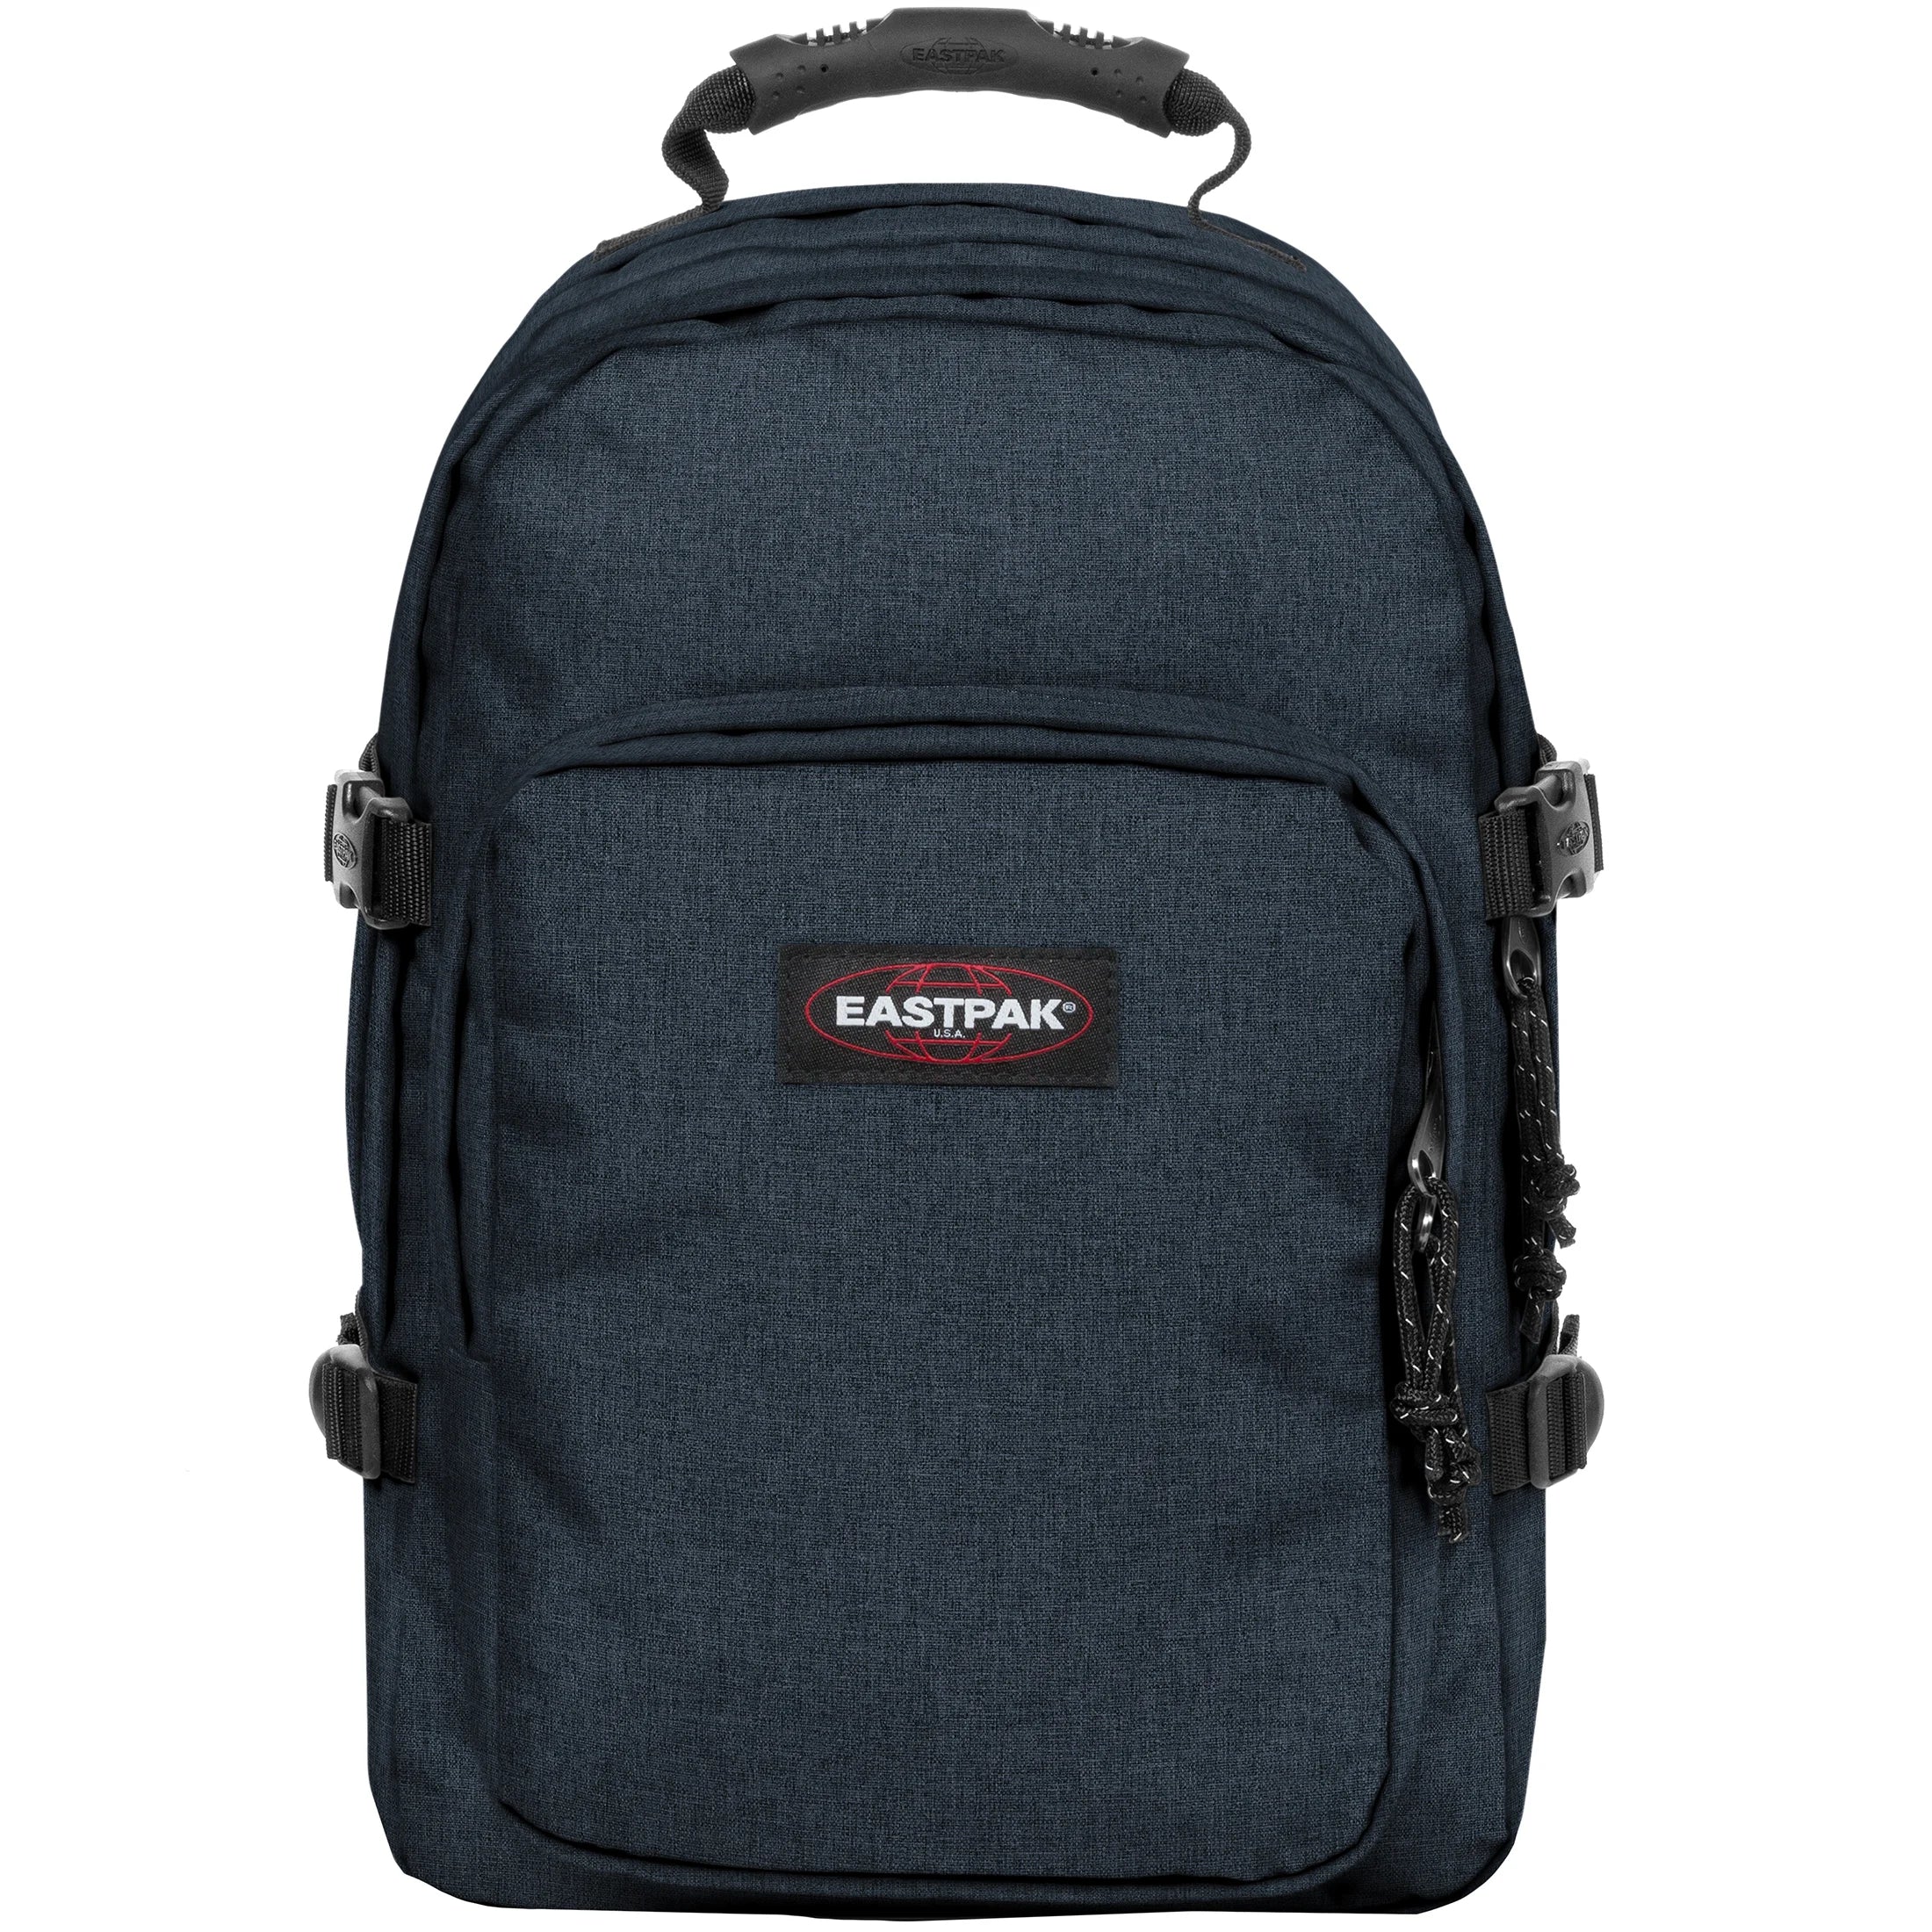 Eastpak Authentic Provider Laptop Backpack 44 cm - triple denim